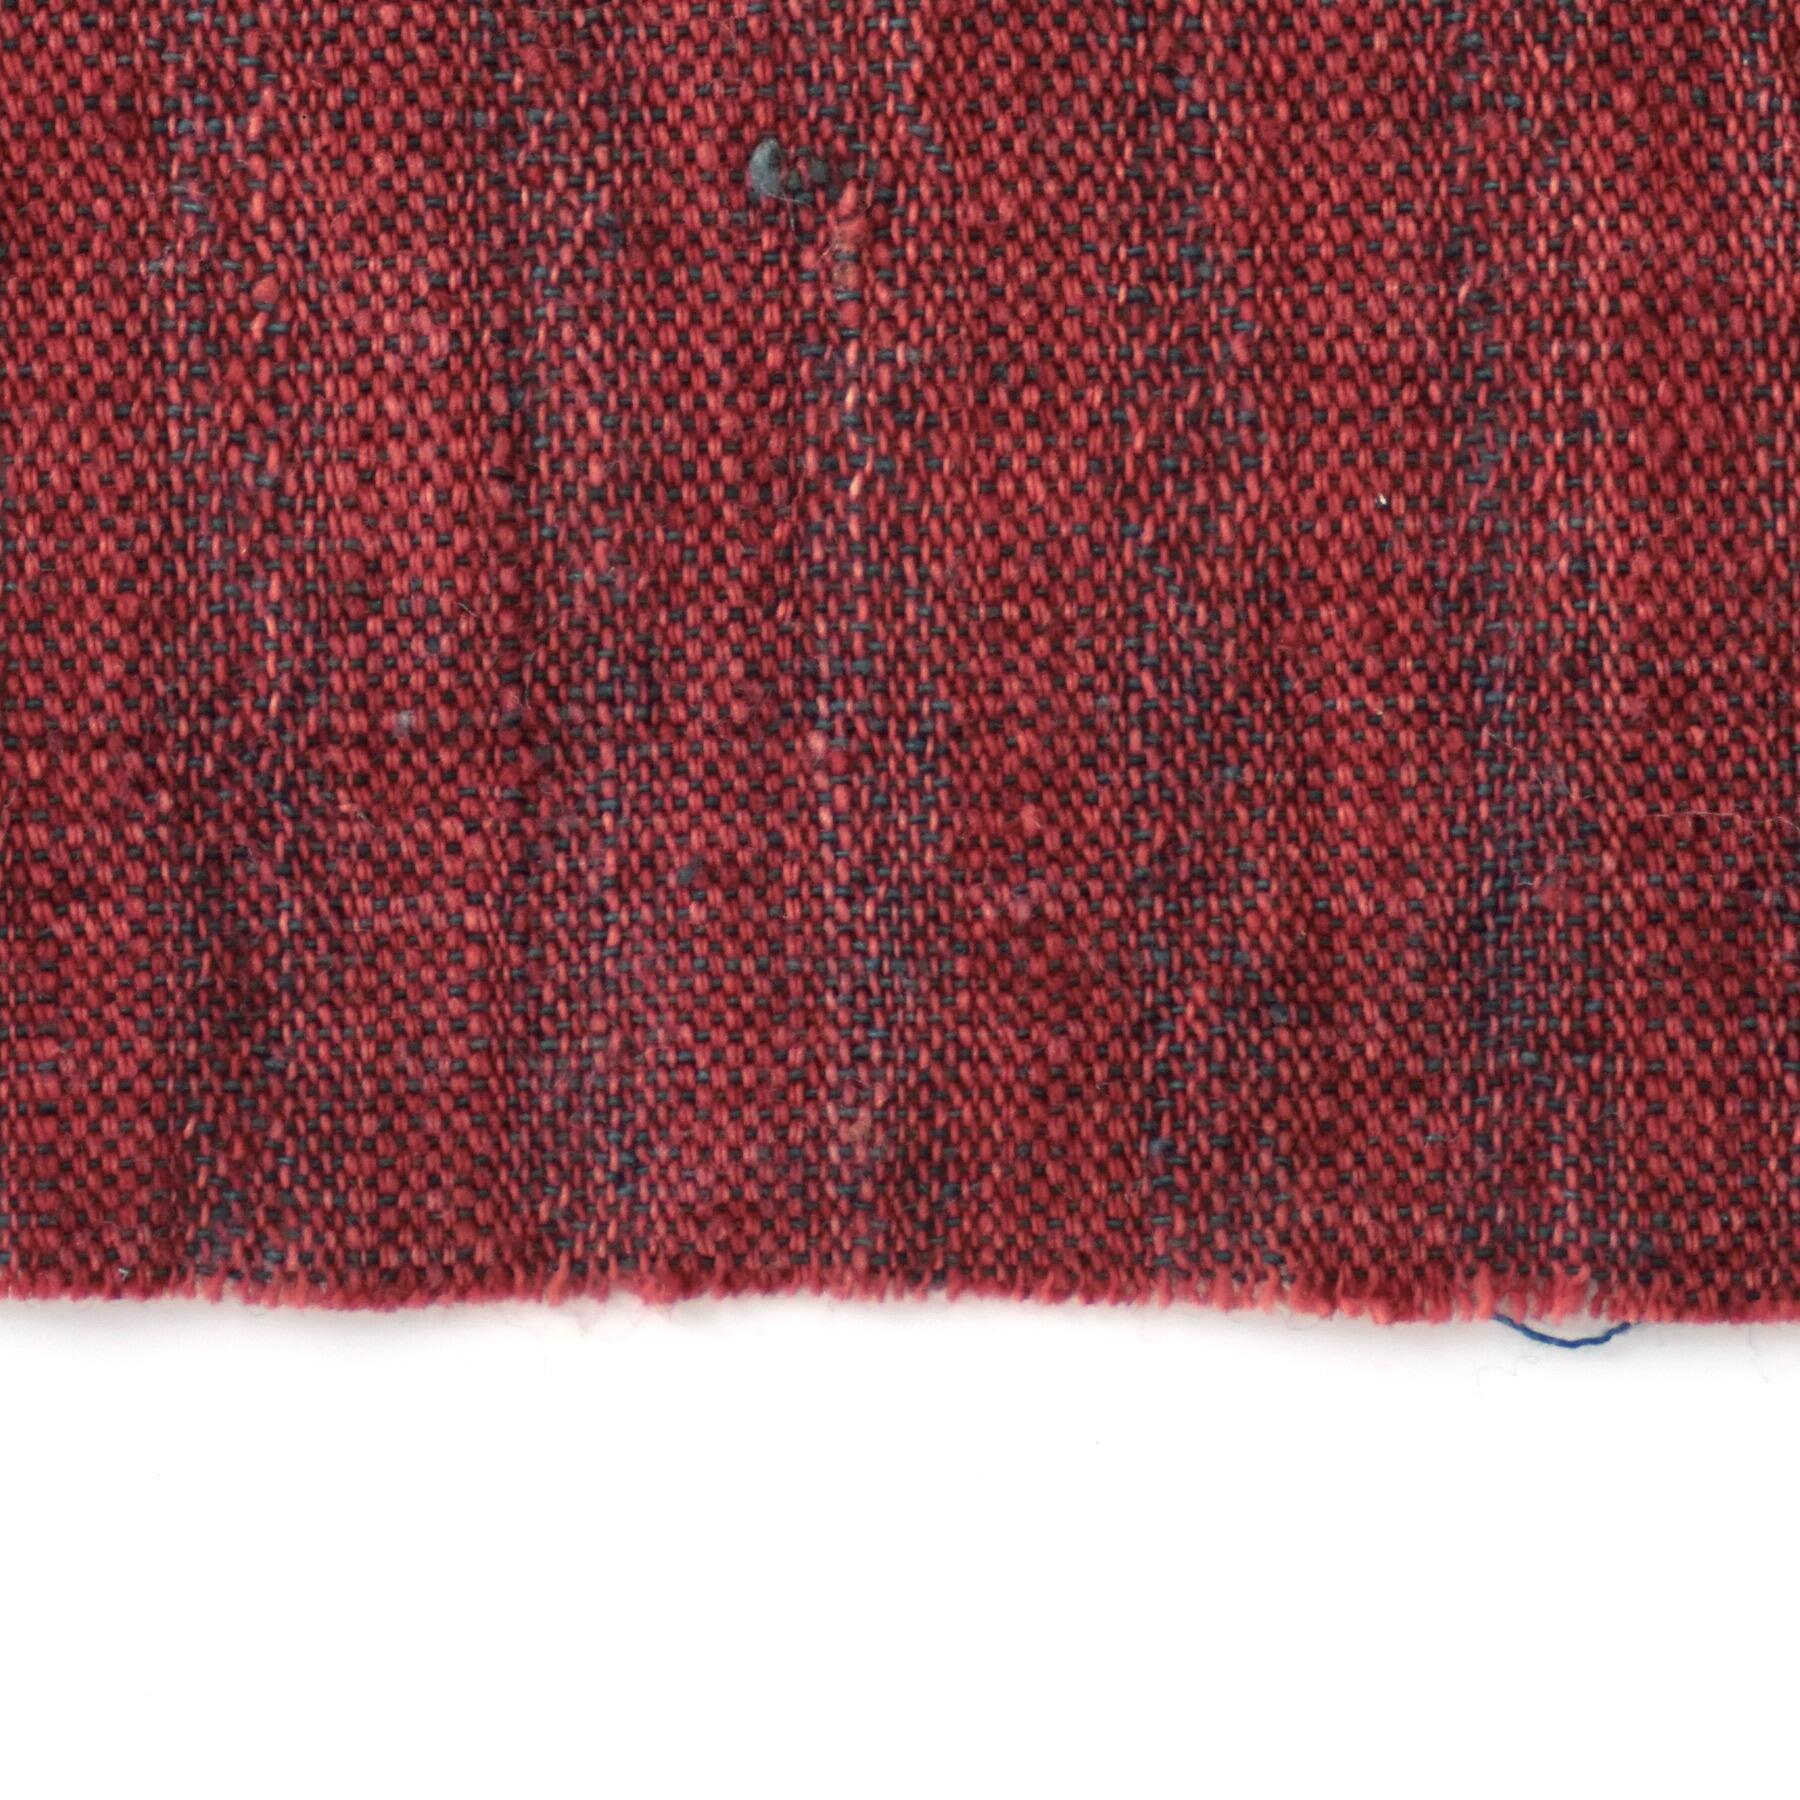 100% Handloom Woven Cotton - Dented Stripes - Red Alizarin Dented Warp, Natural Indigo Green Warp - Close Up